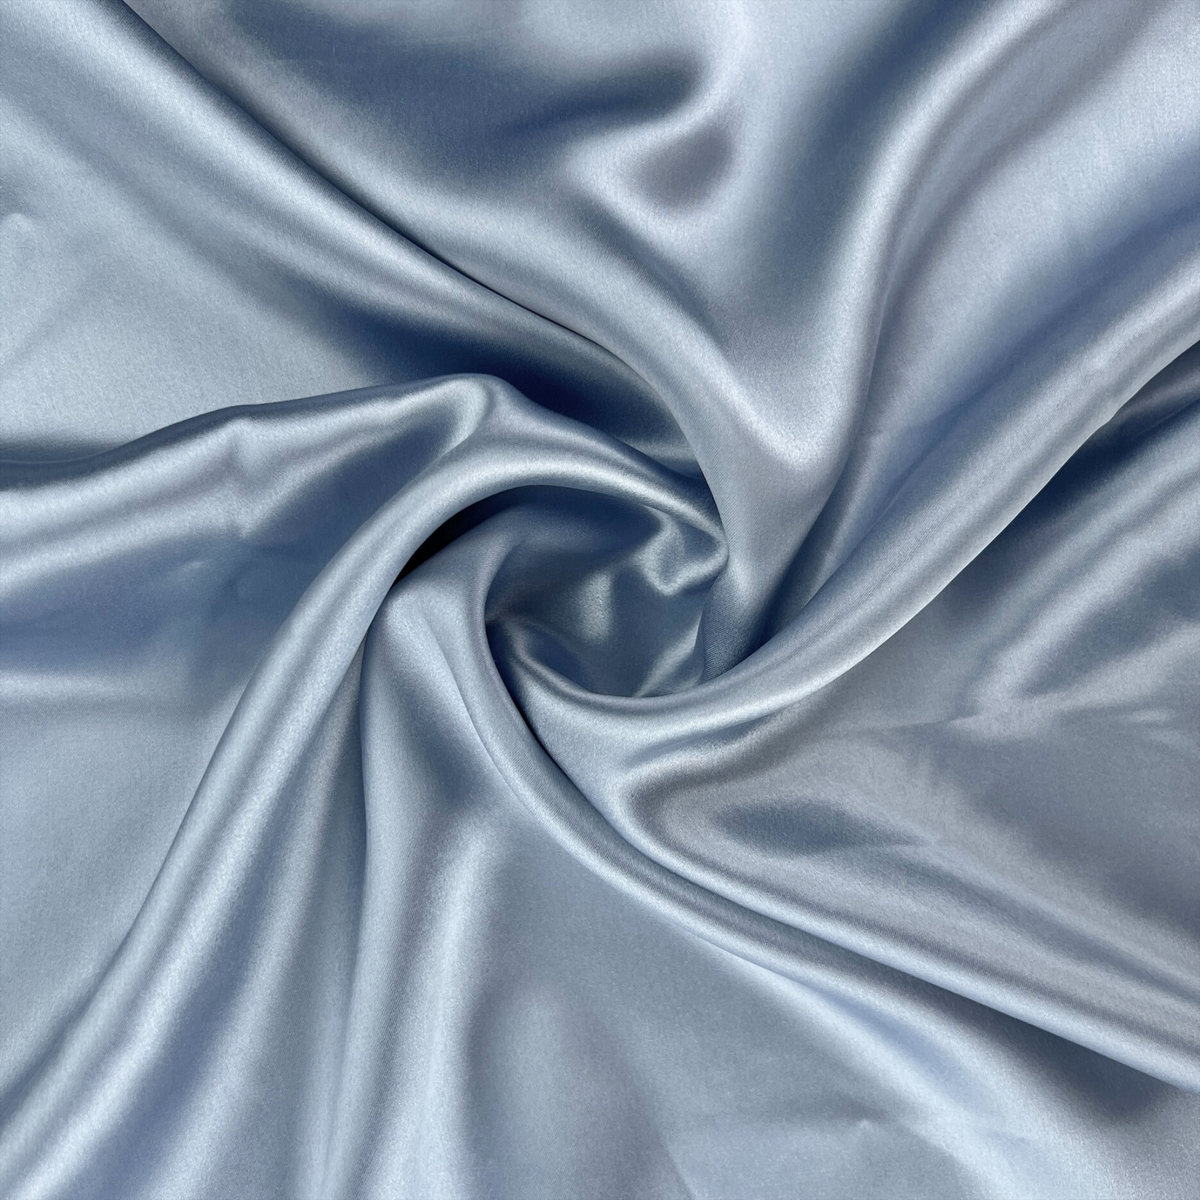 Mulberry Park Silks 22 Momme Duvet Covers and Shams - Steel Blue